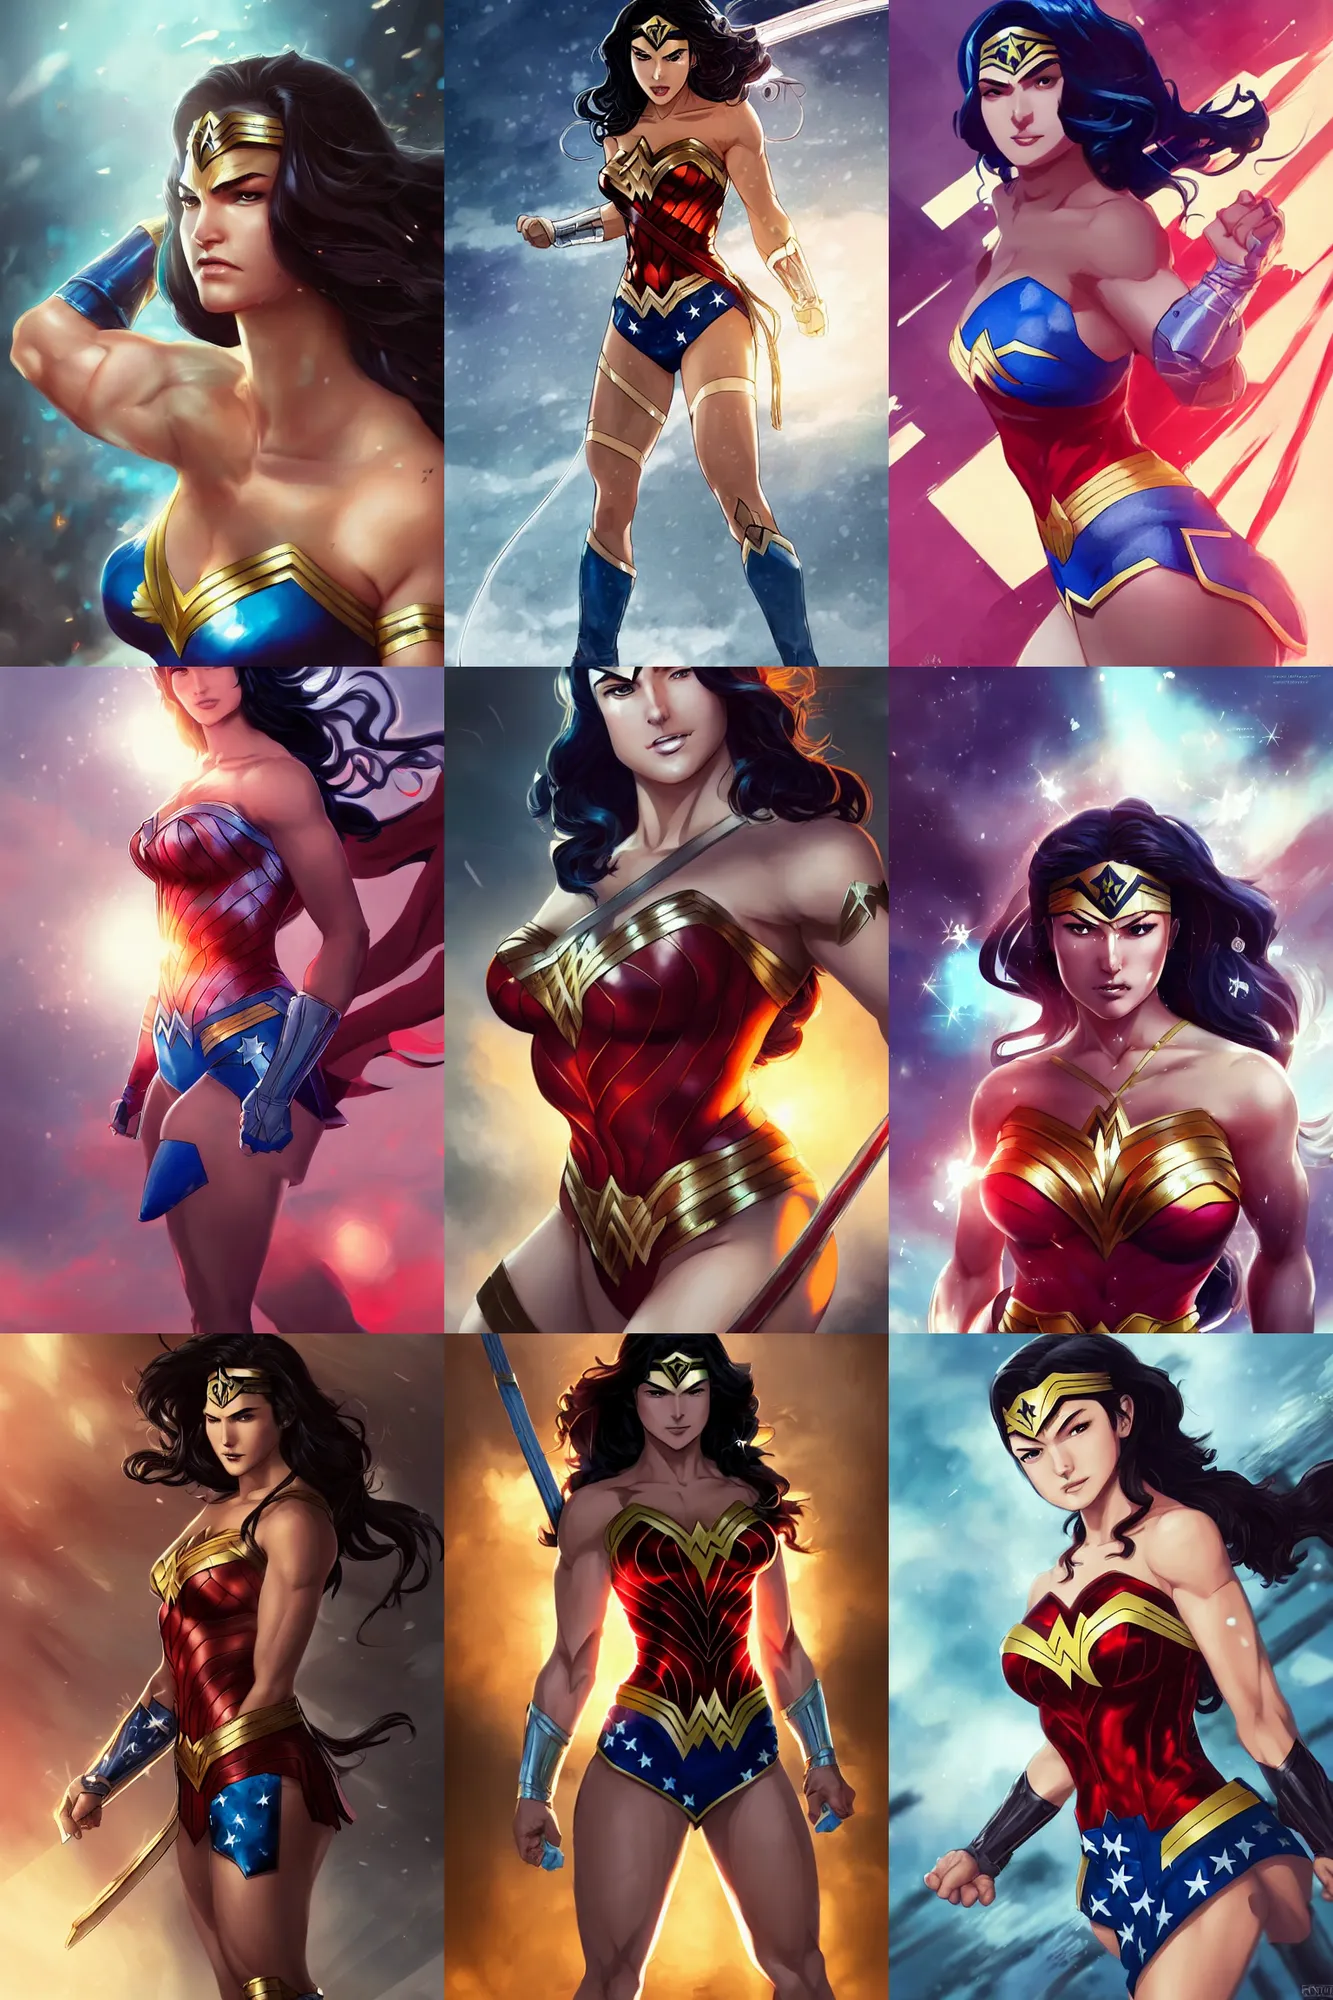 Prompt: beautiful anime art of Gina Carano as Wonder Woman by WLOP, rossdraws, Logan Cure, Mingchen Shen, BangkuART, sakimichan, yan gisuka, JeonSeok Lee, zeronis, Chengwei Pan on artstation